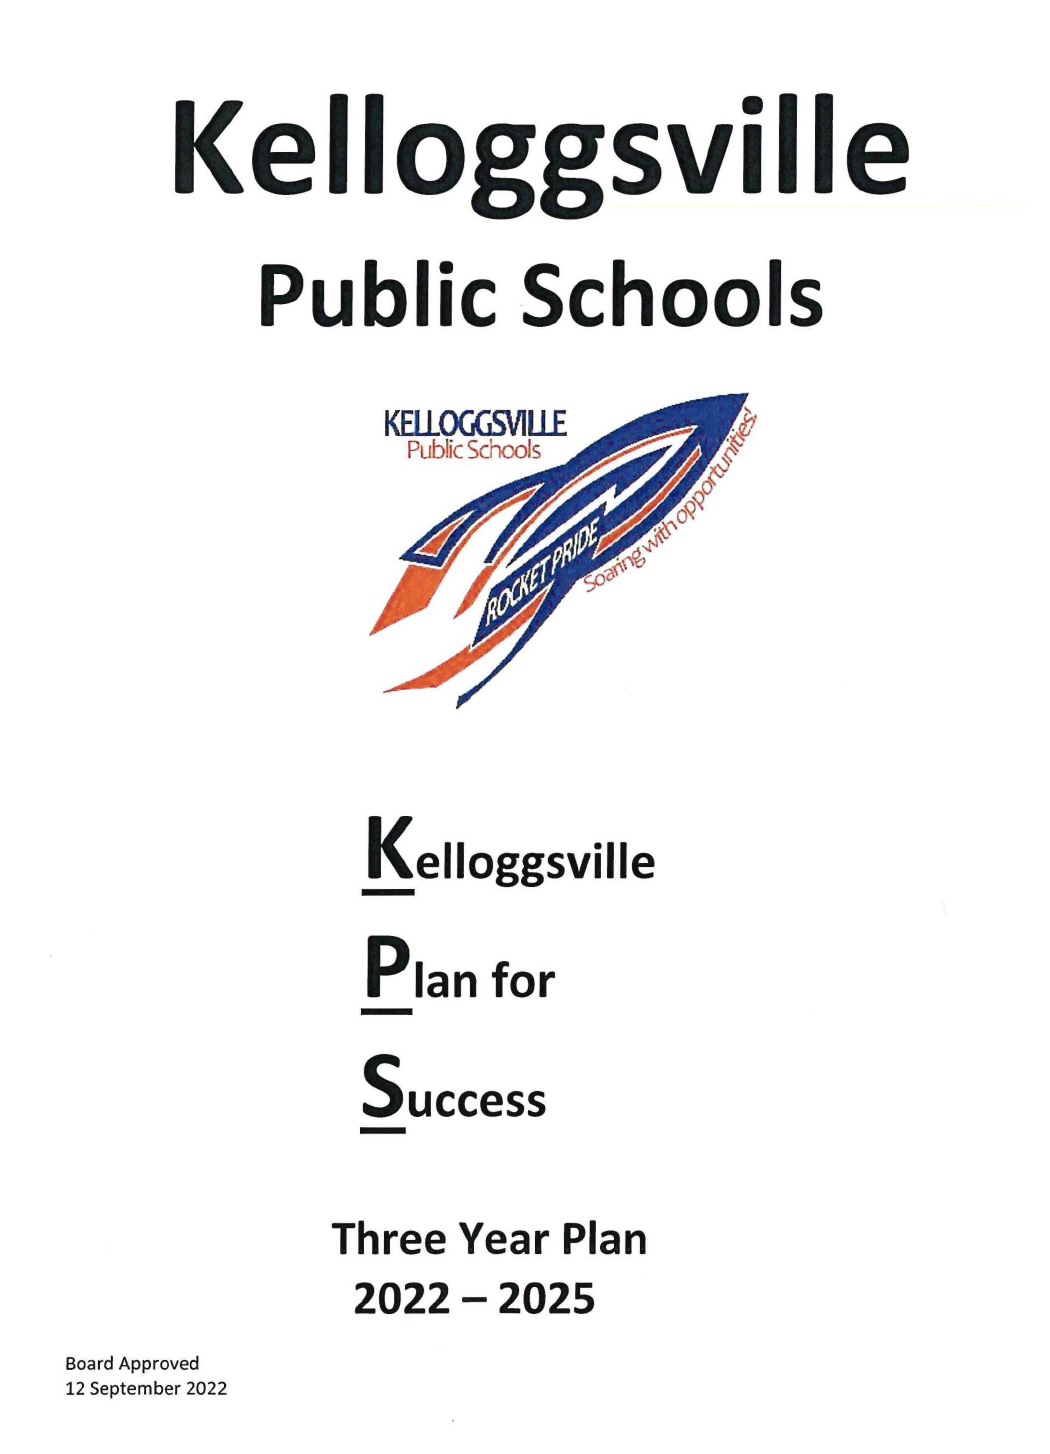 Kelloggsville Public Schools 2022-25 Three Year Success Plan